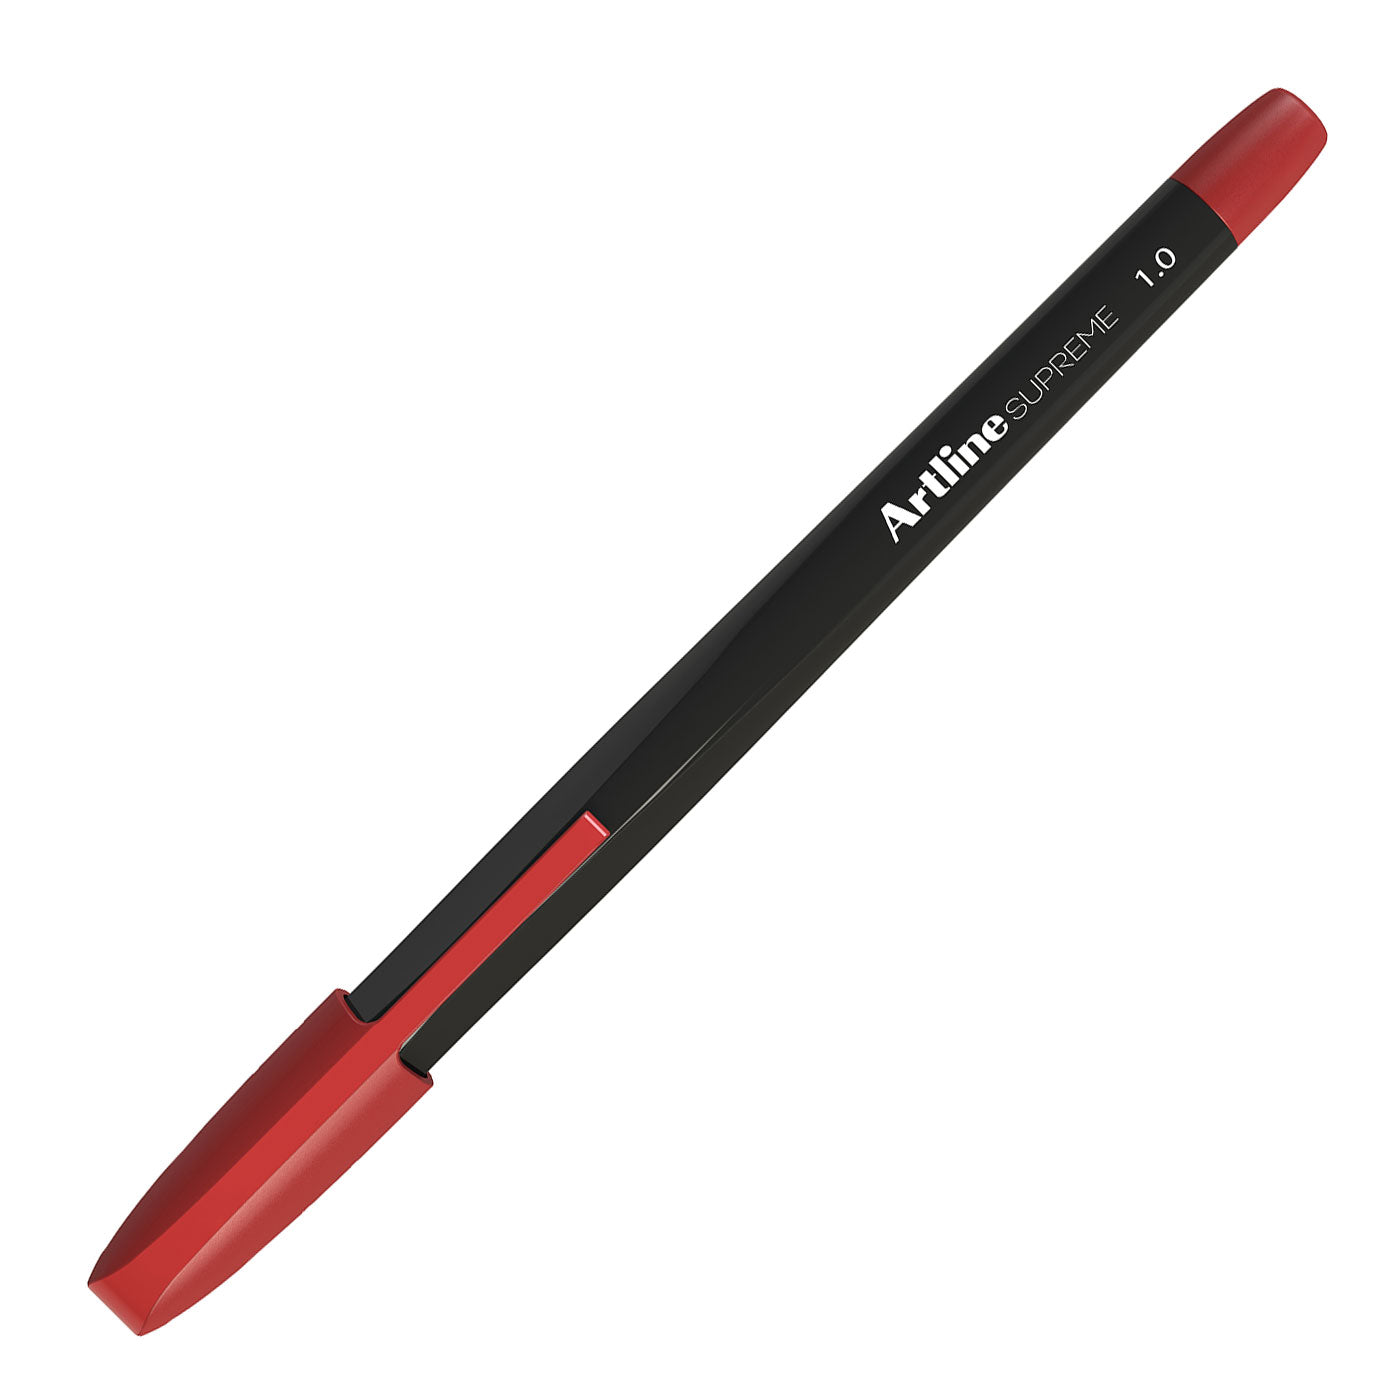 Artline Supreme Ballpoint Pen Capped Red